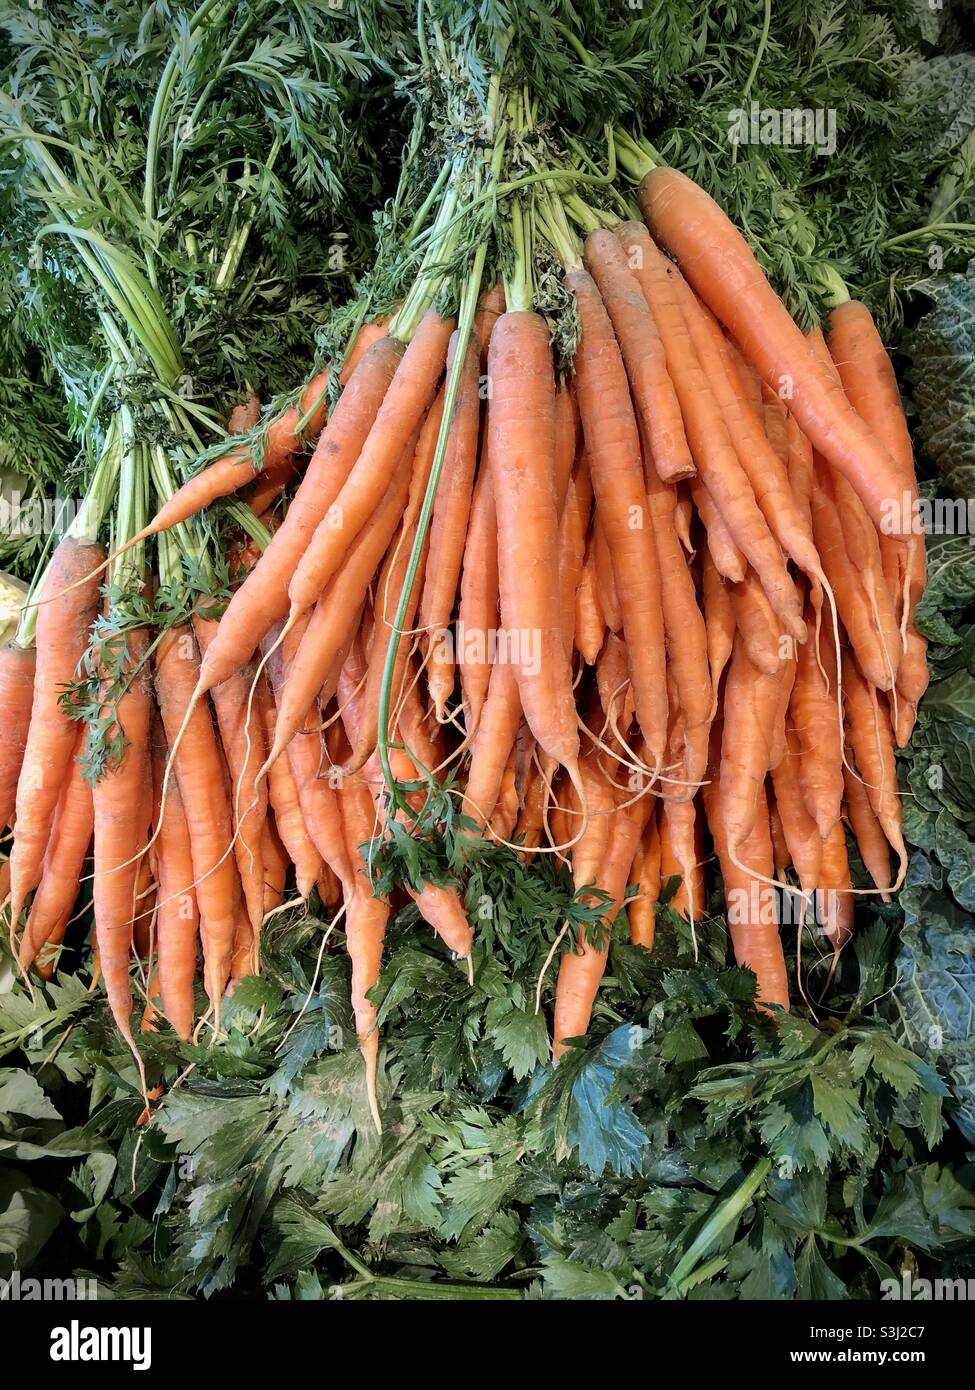 Fresh carrots (Daucus carota sativus) with green leaves on display Stock Photo